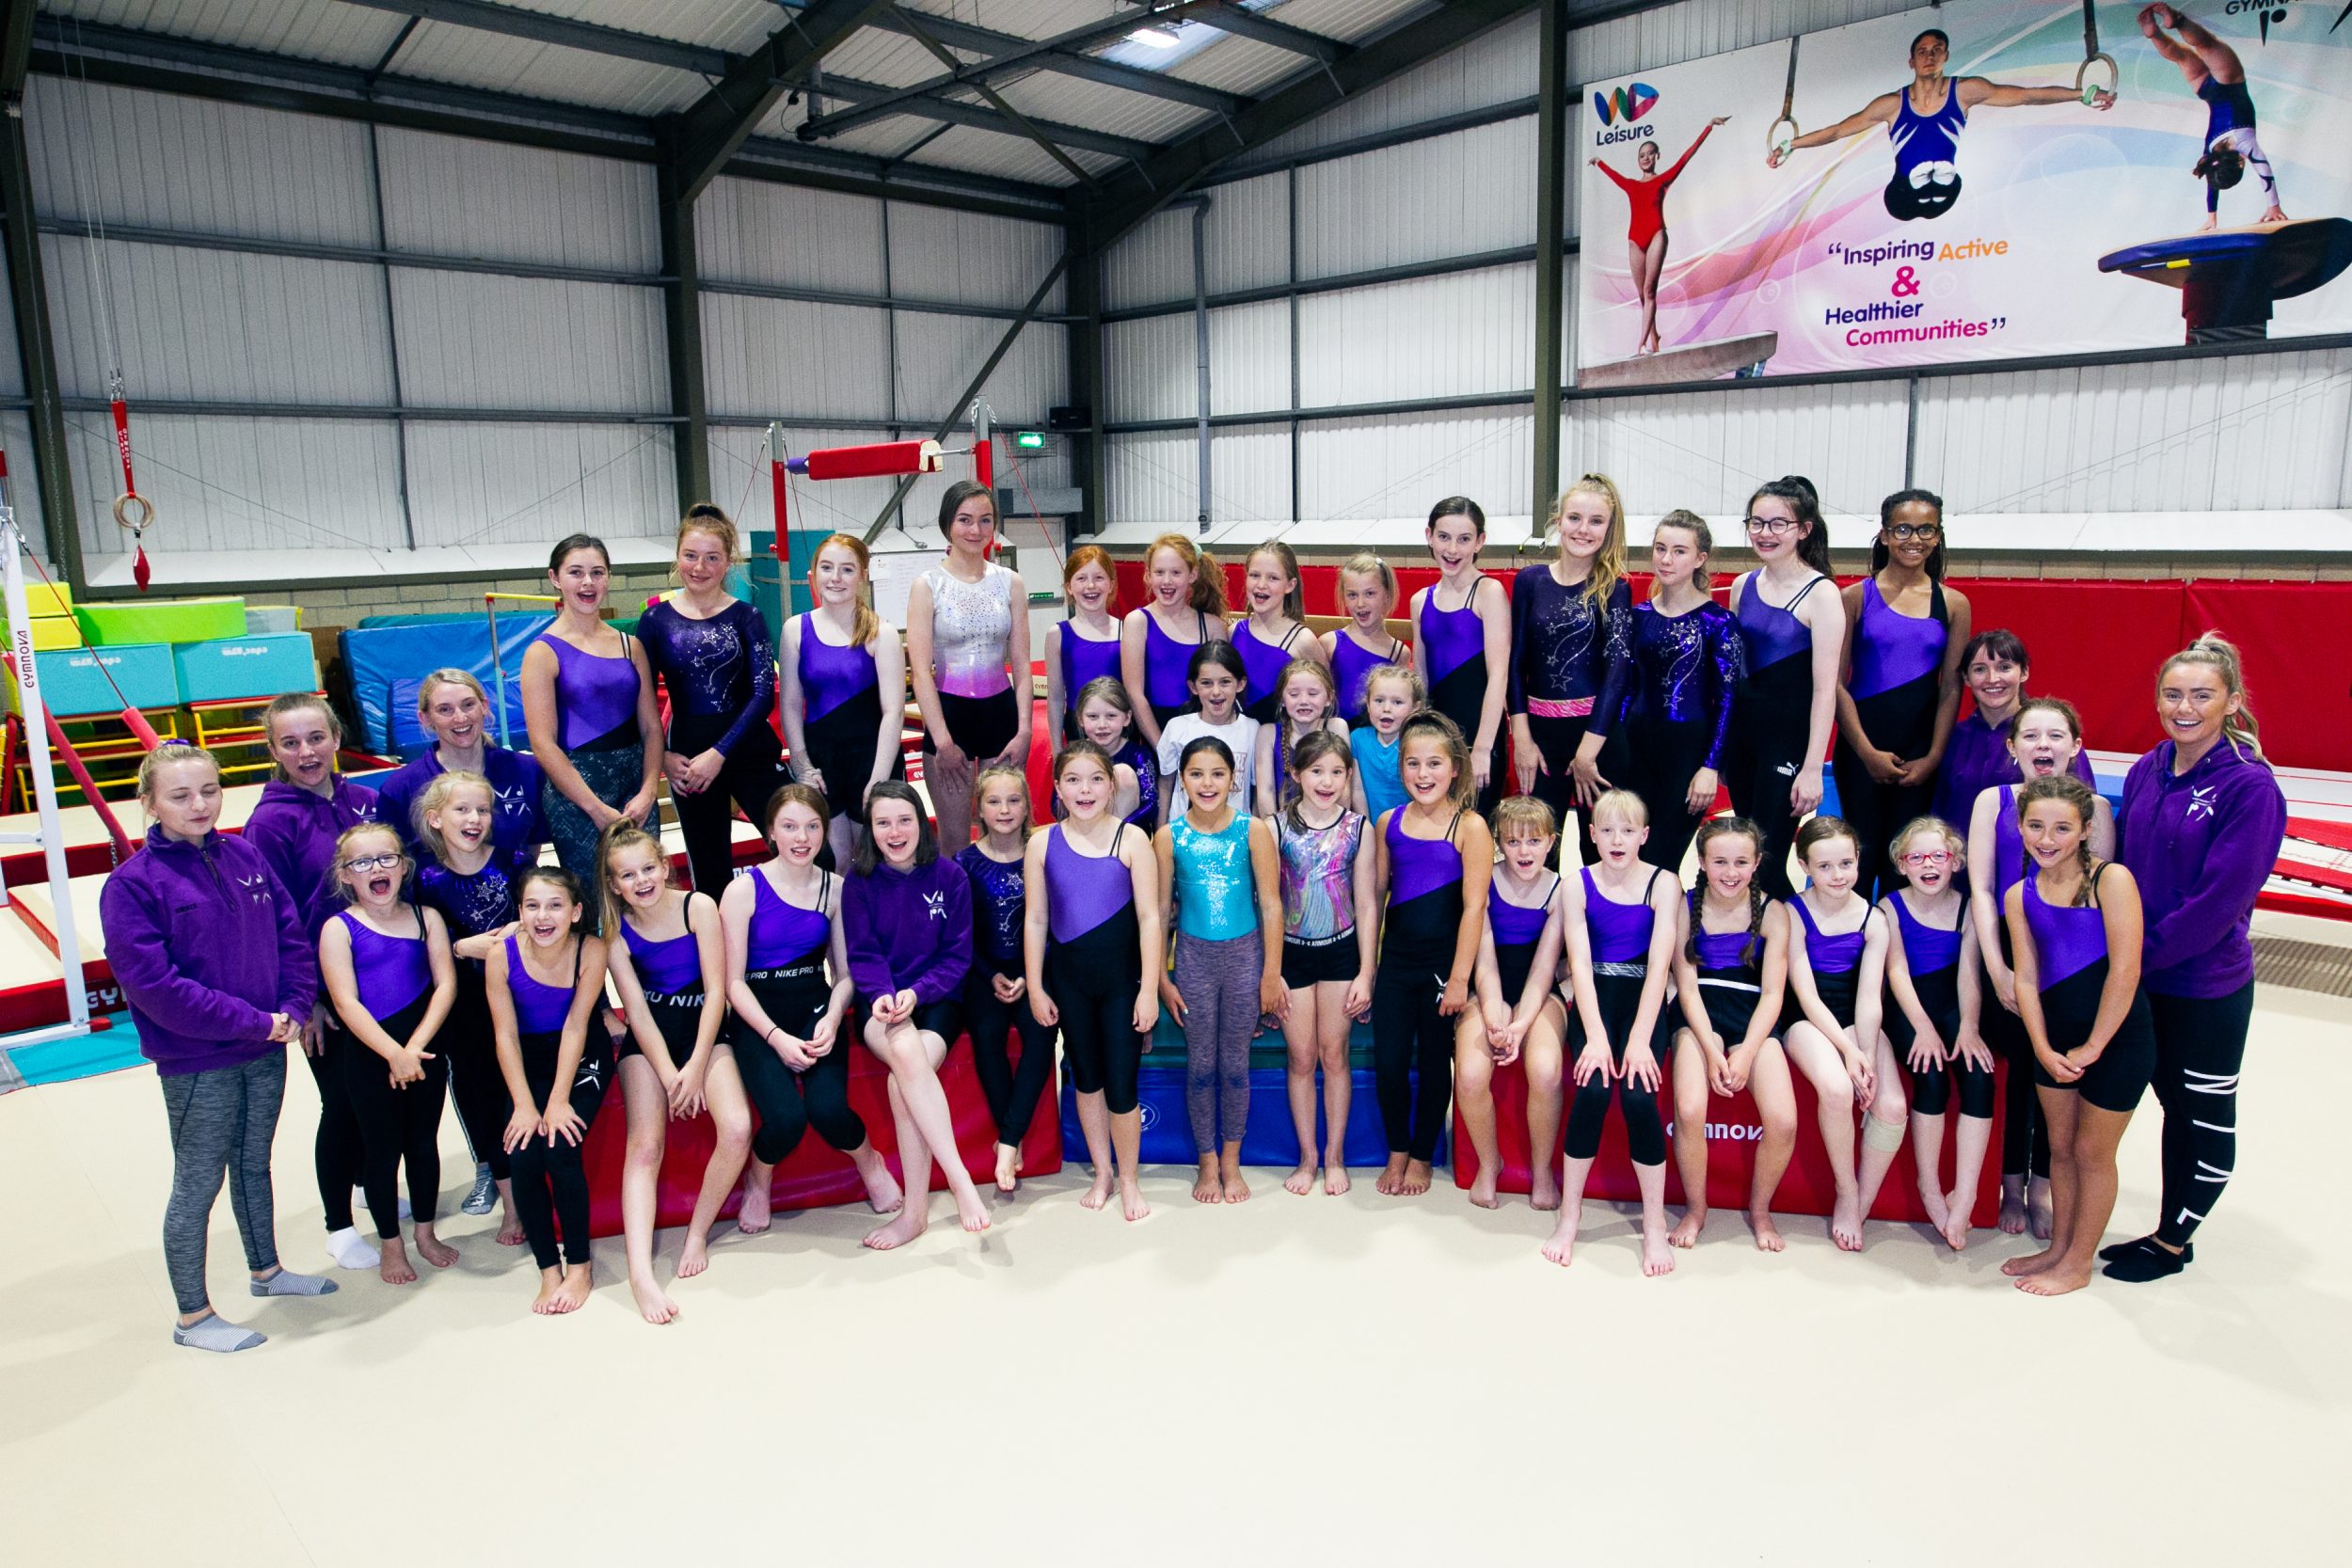 Members of West Dunbartonshire Gymnastics Club